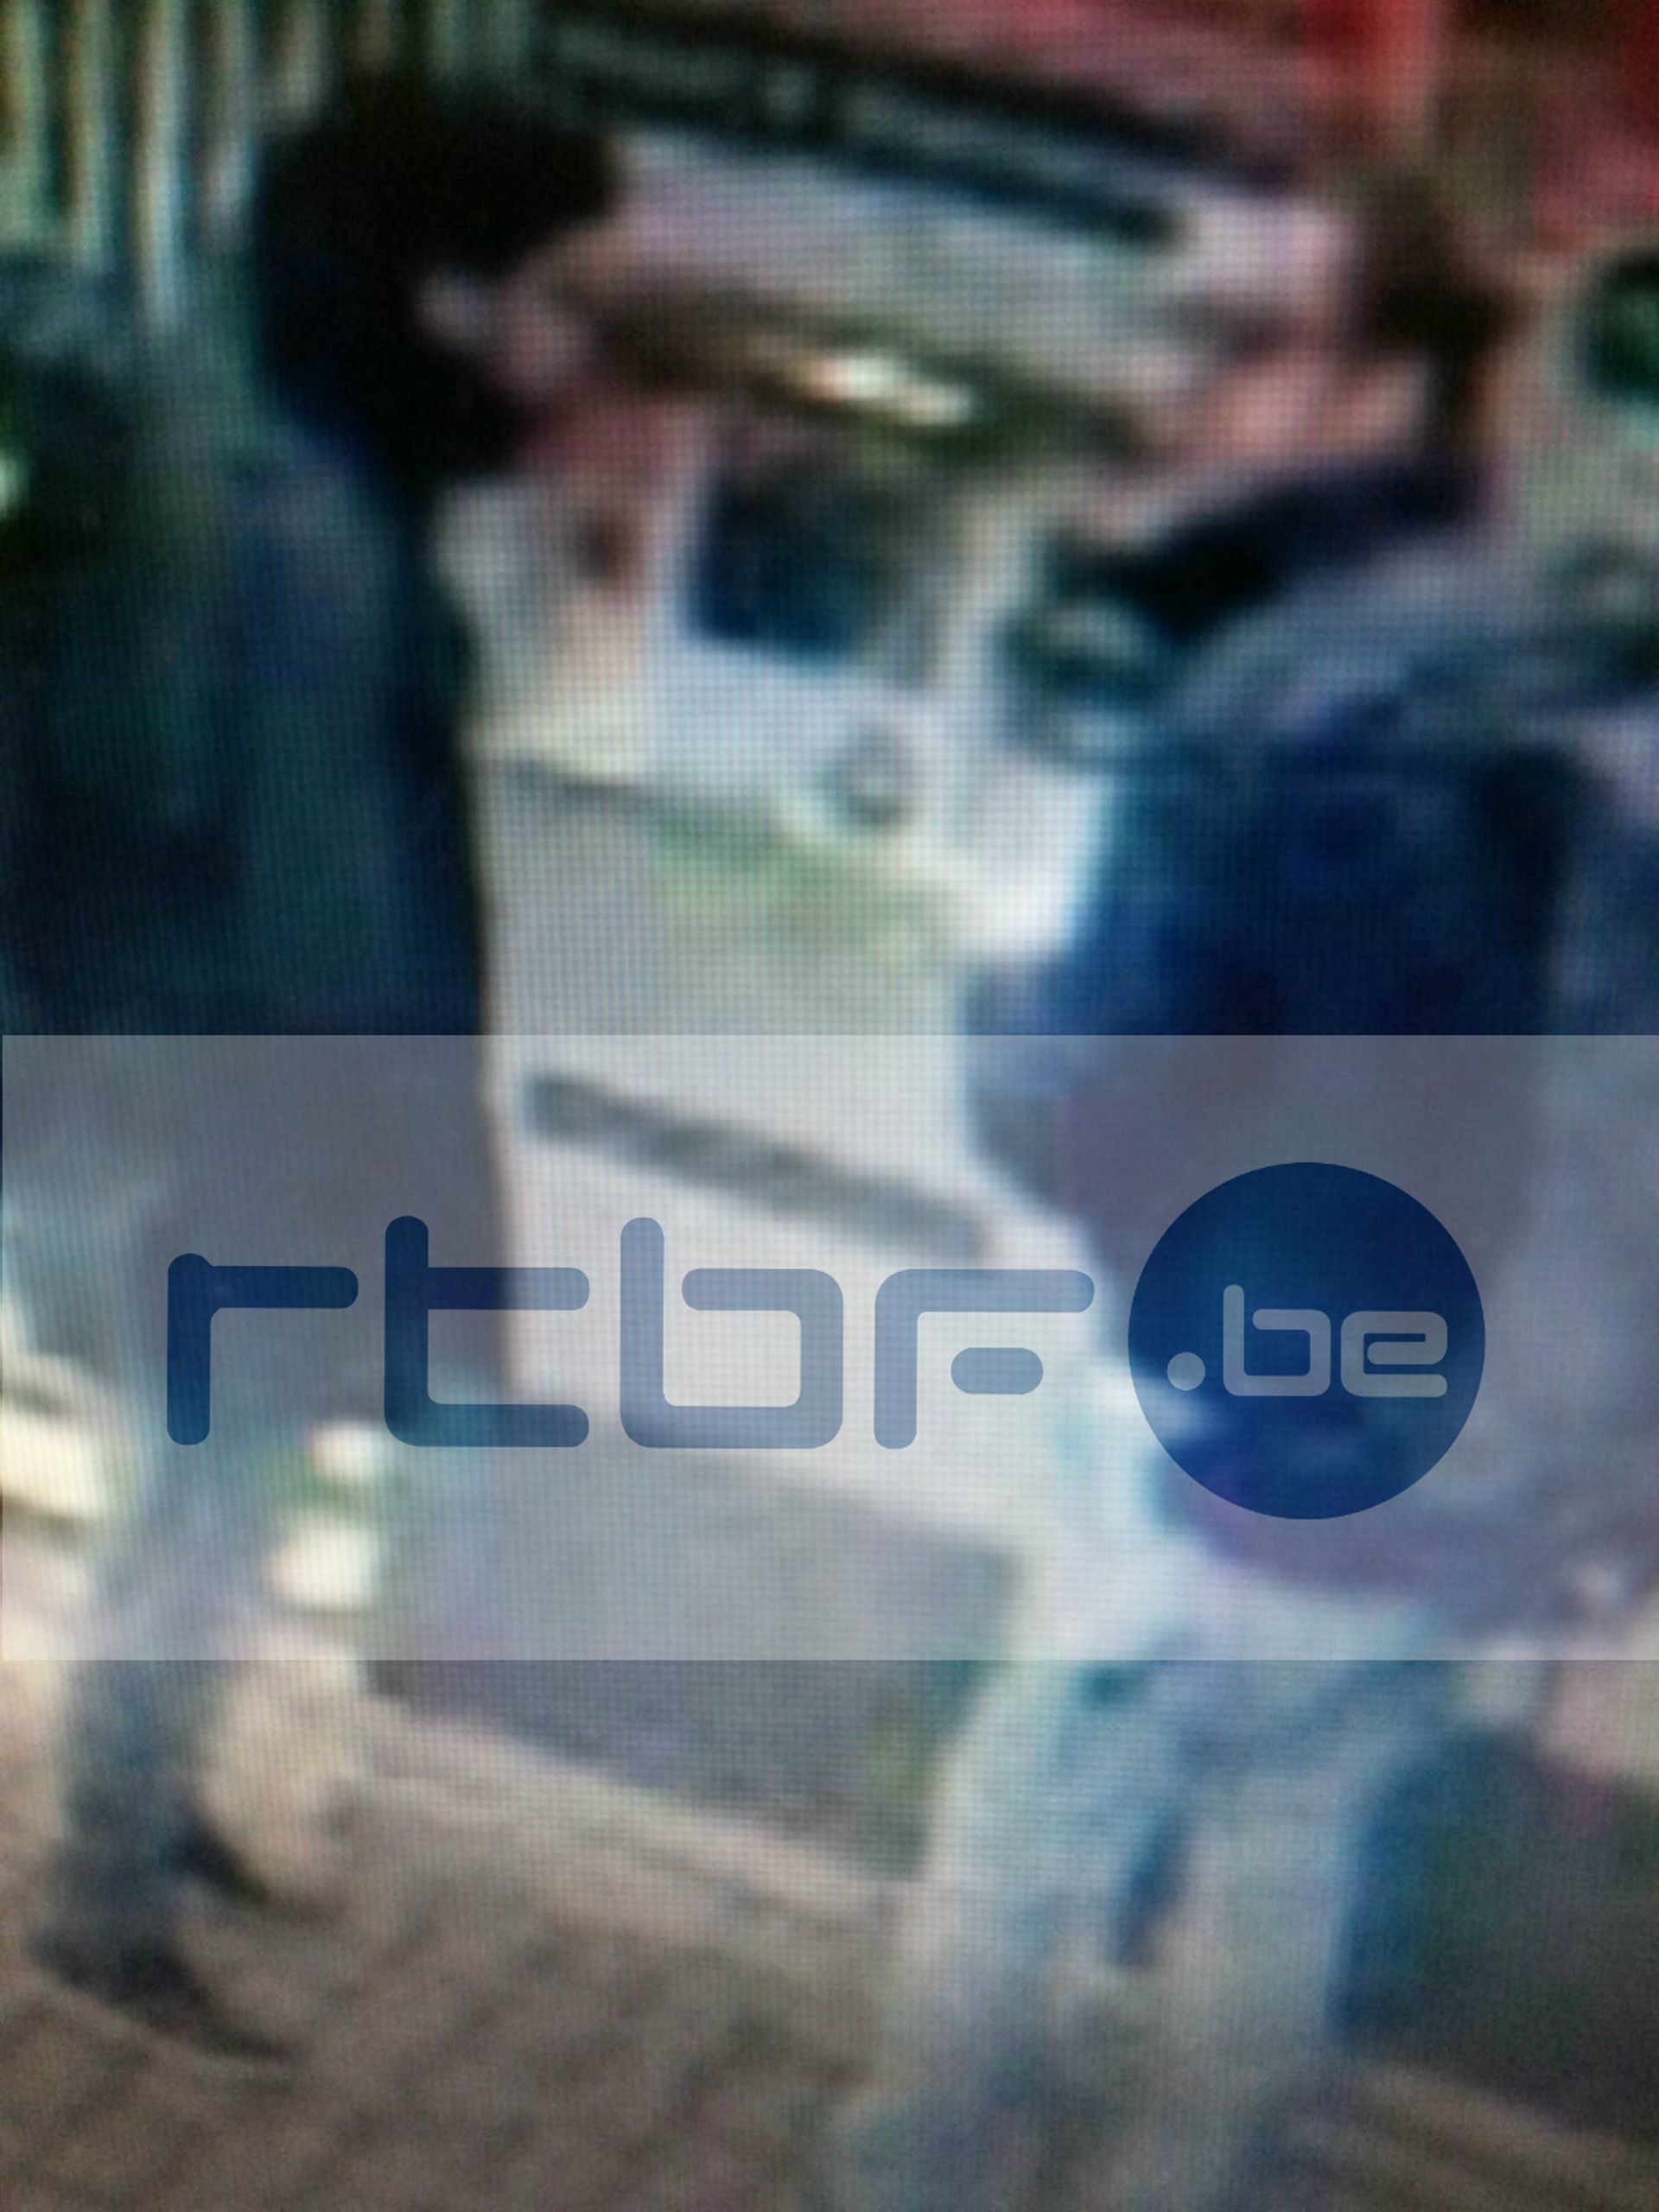 Ossama Krayem et Khalid El Bakraoui à la station de métro Pétillon avant les attentats de Maelbeek